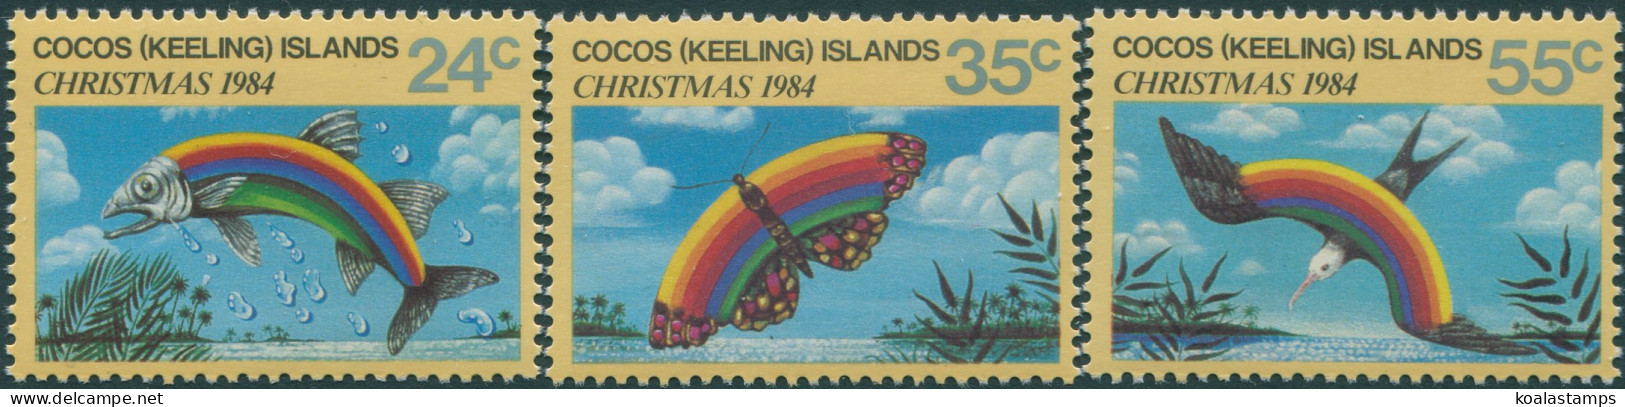 Cocos Islands 1984 SG122-124 Christmas Set MNH - Kokosinseln (Keeling Islands)